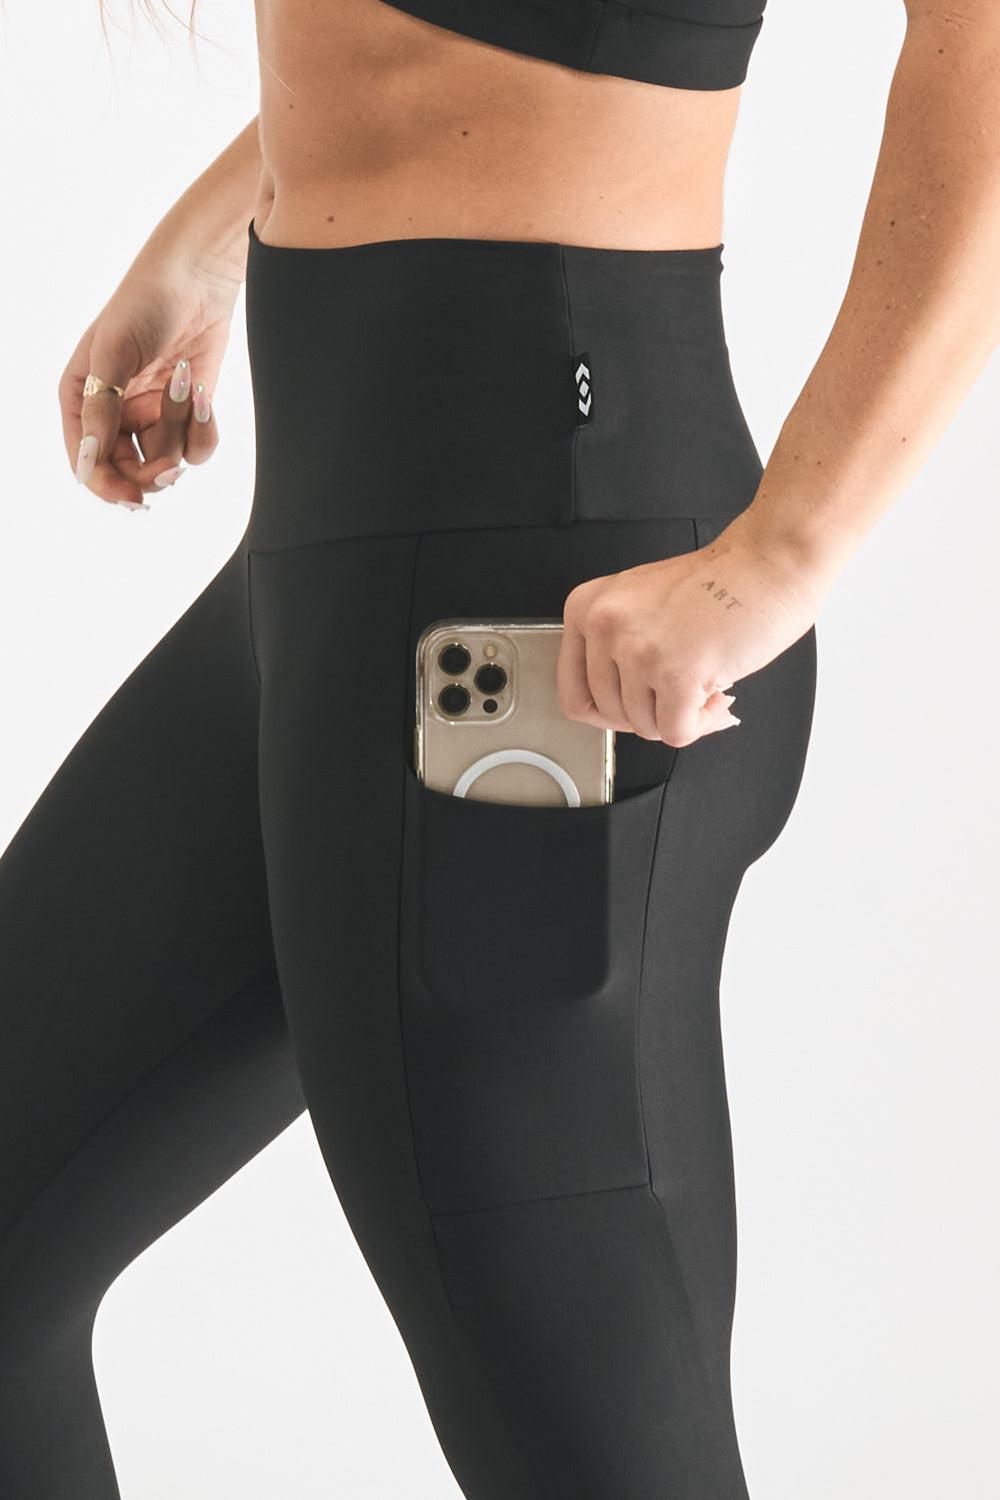 Black Performance - Panel Pocket High Waisted Capri Leggings-Activewear-Exoticathletica